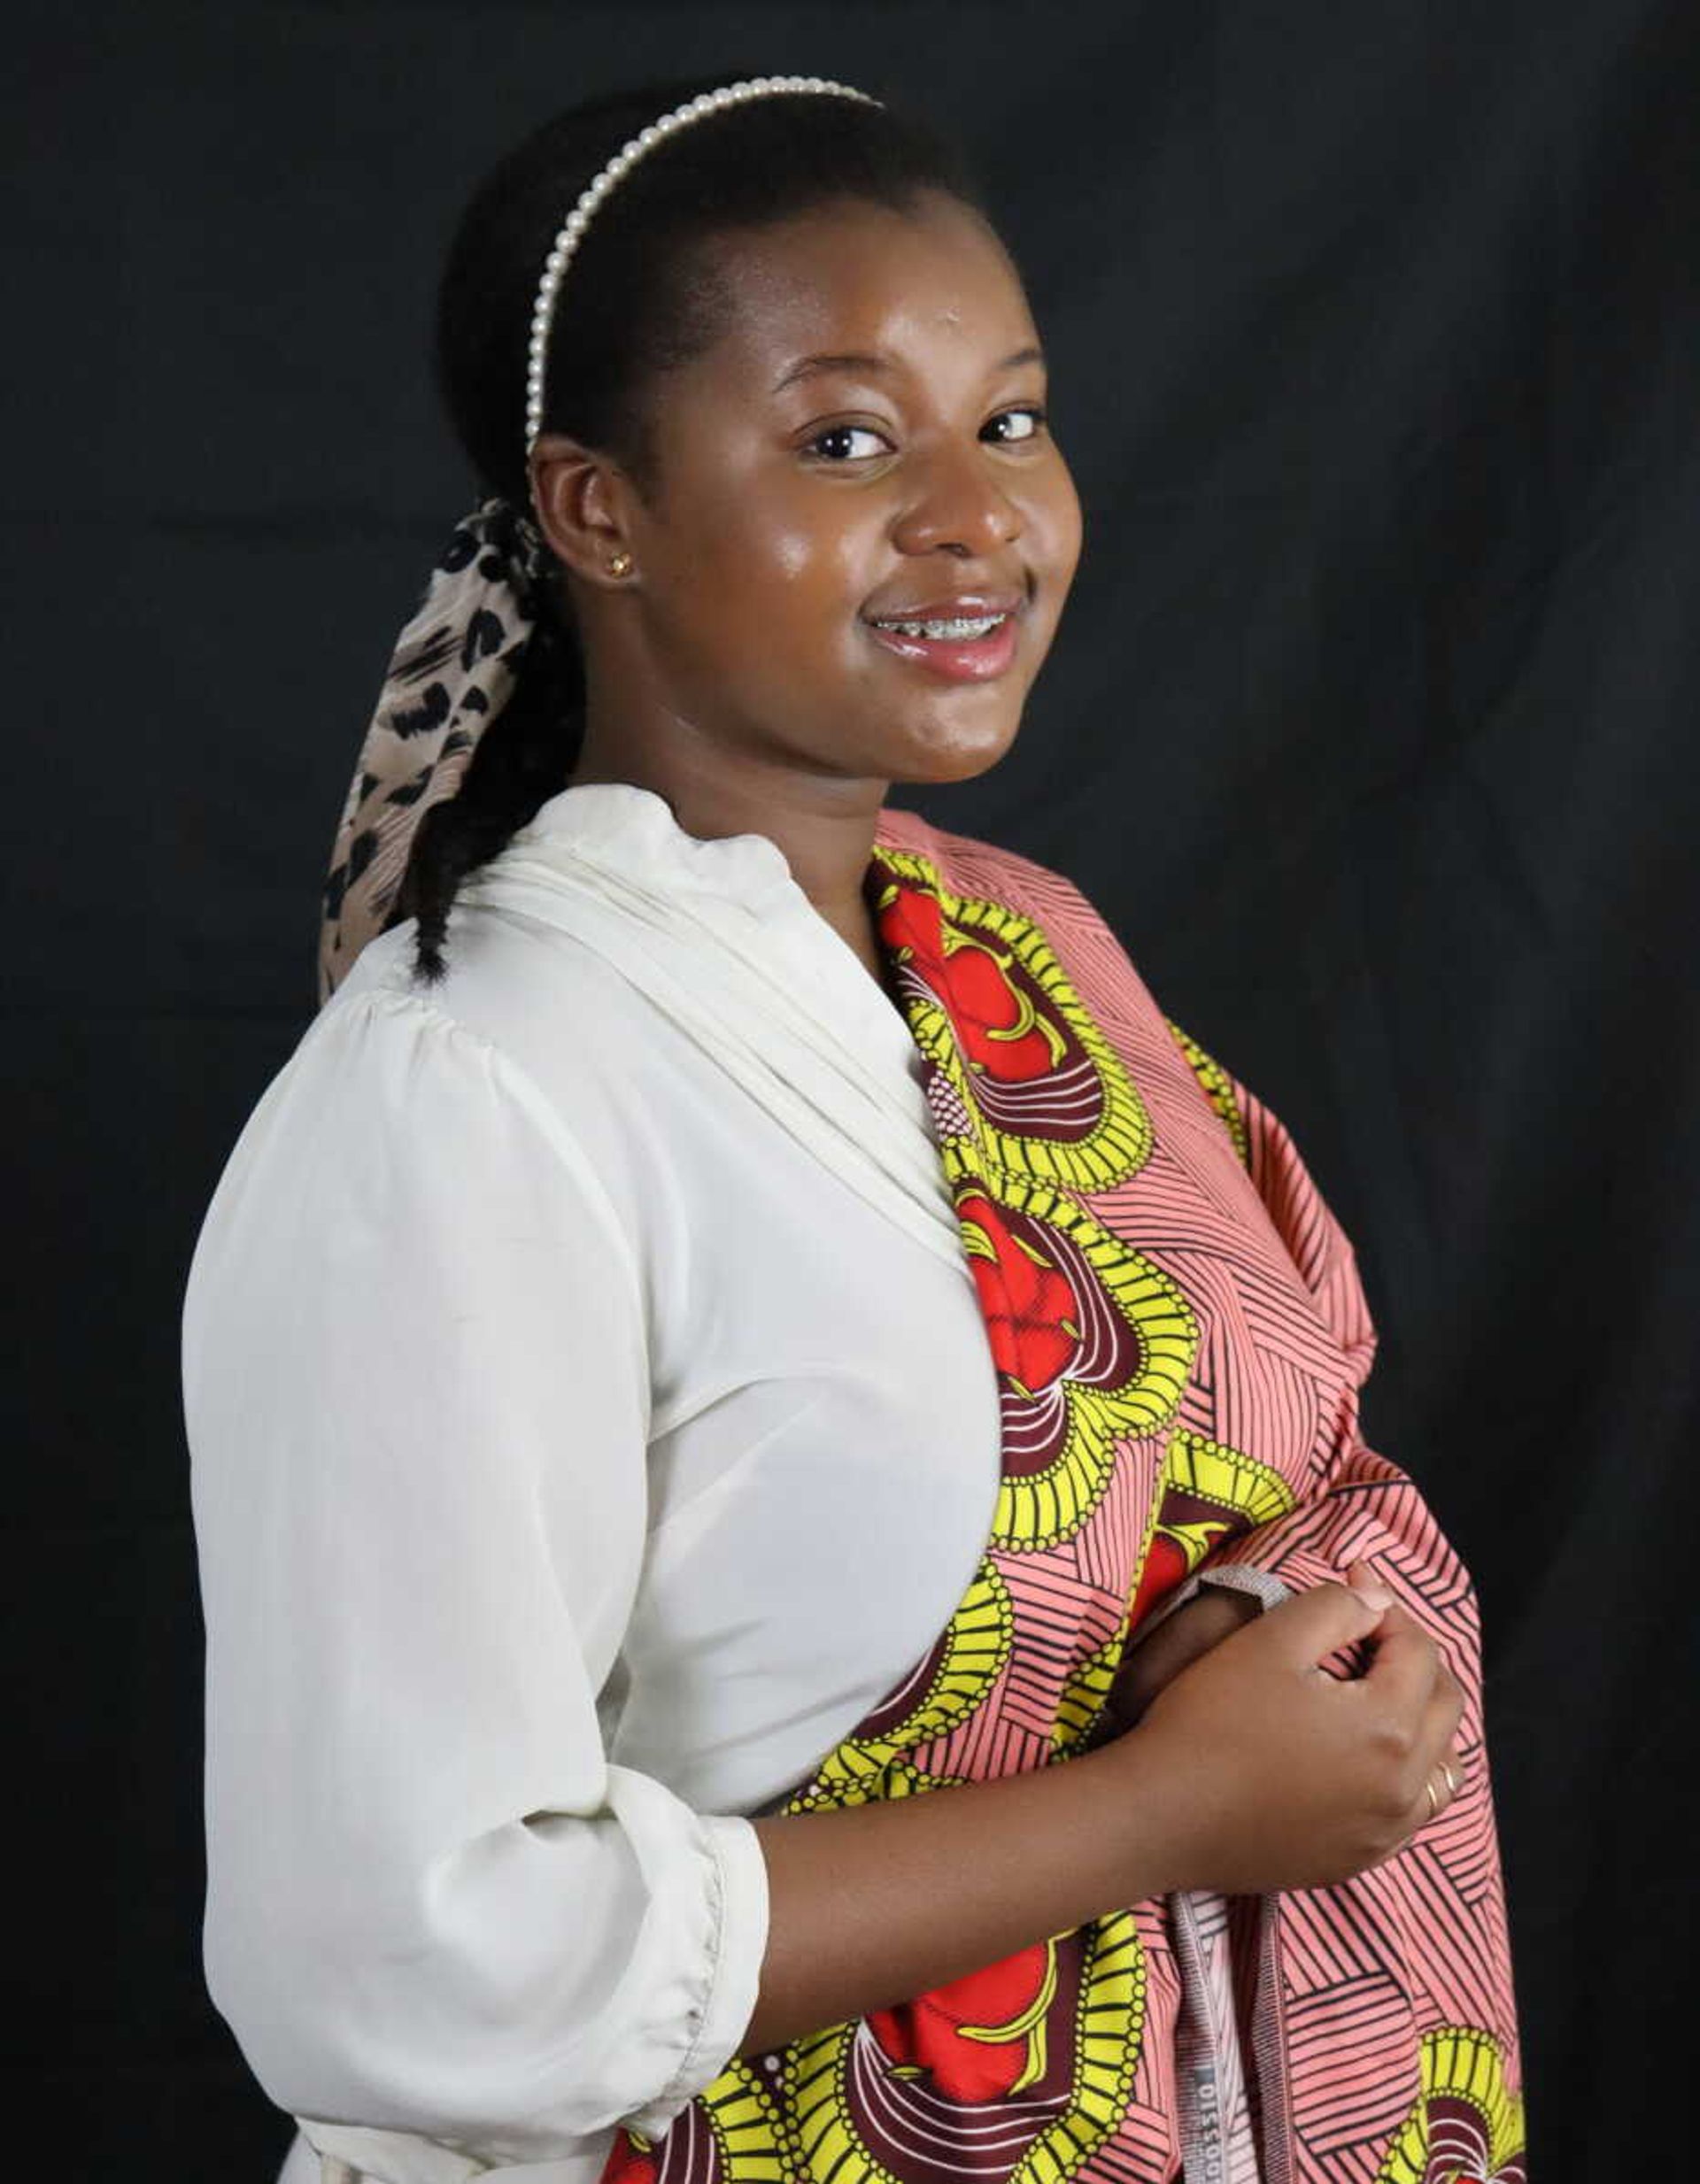 Tana Musunda is from Zimbabwe and is currently studying finance and entrepreneurship.